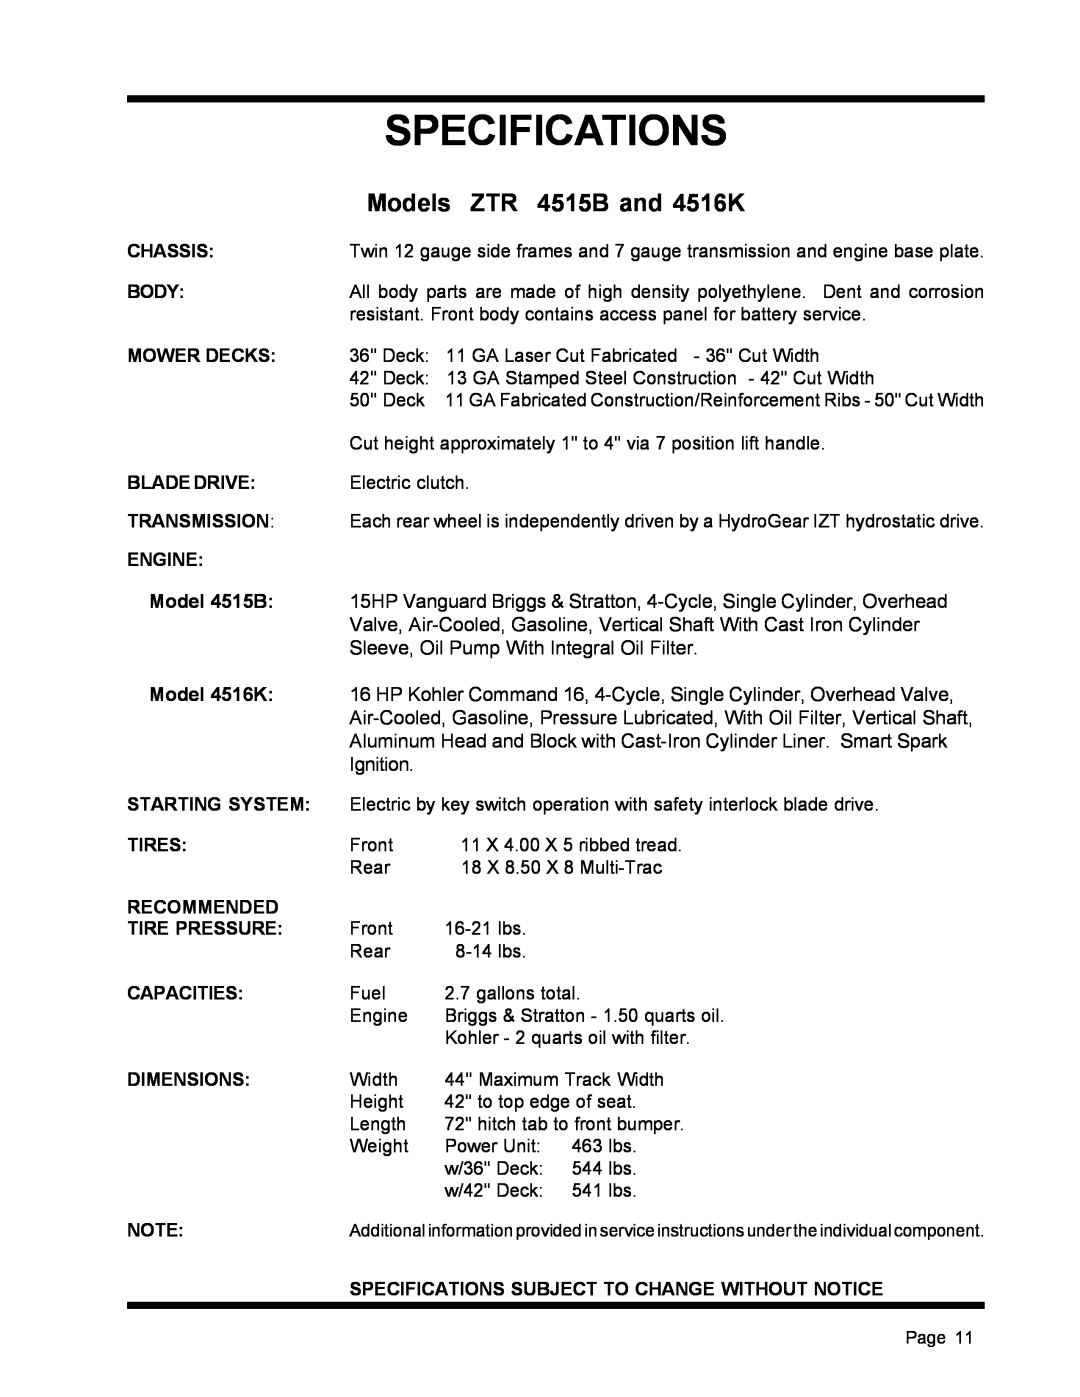 Dixon ZTR 4516K manual Specifications, Models ZTR 4515B and 4516K, Model 4515B, Model 4516K 